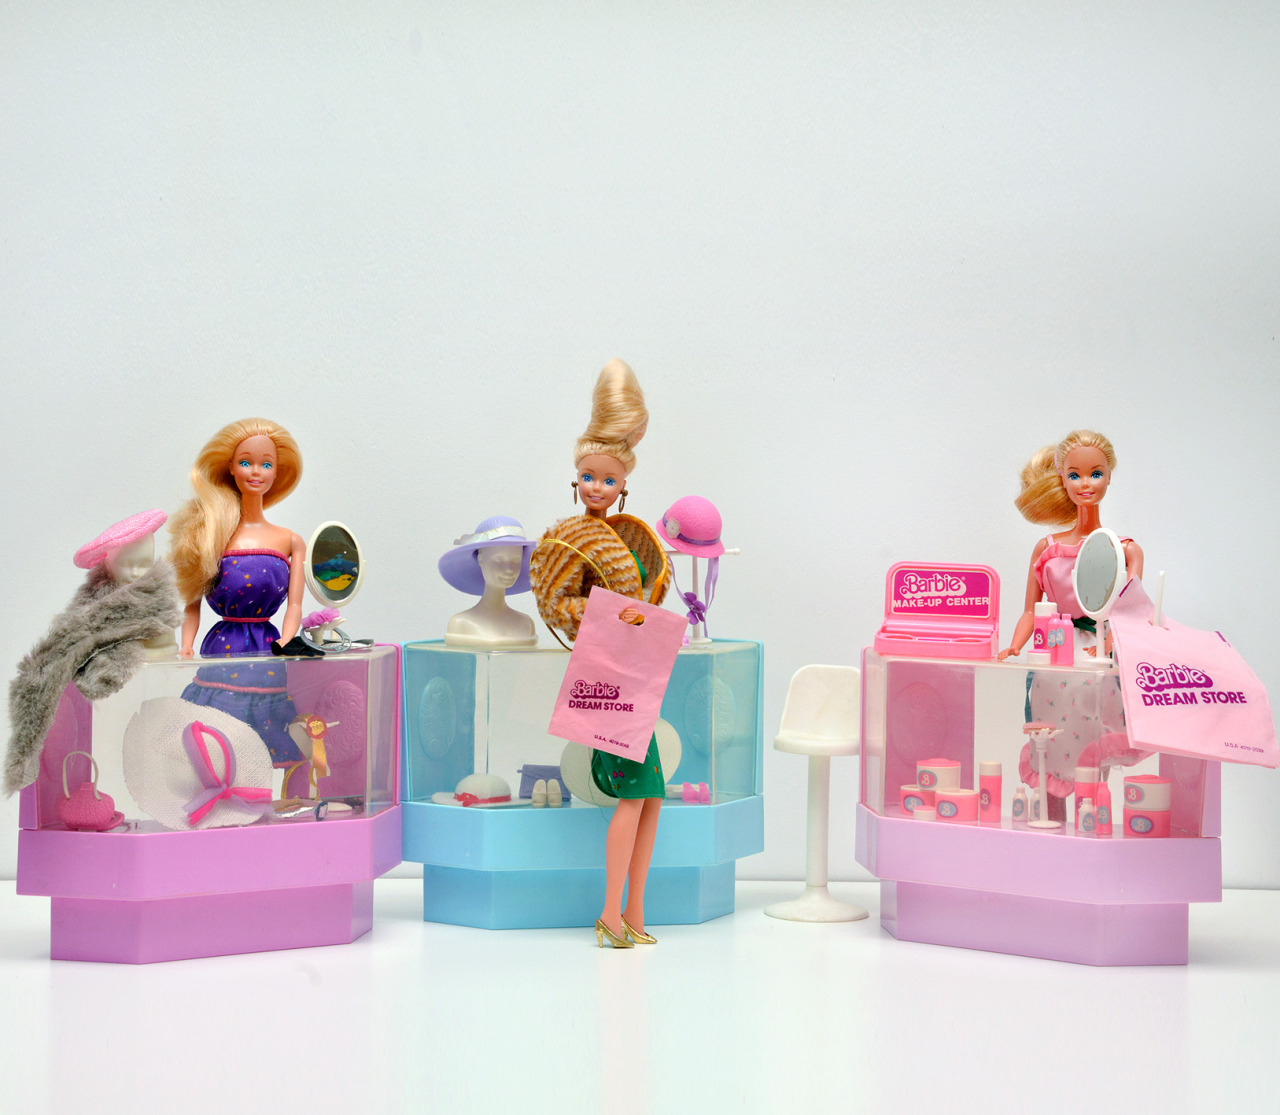 barbie dream store